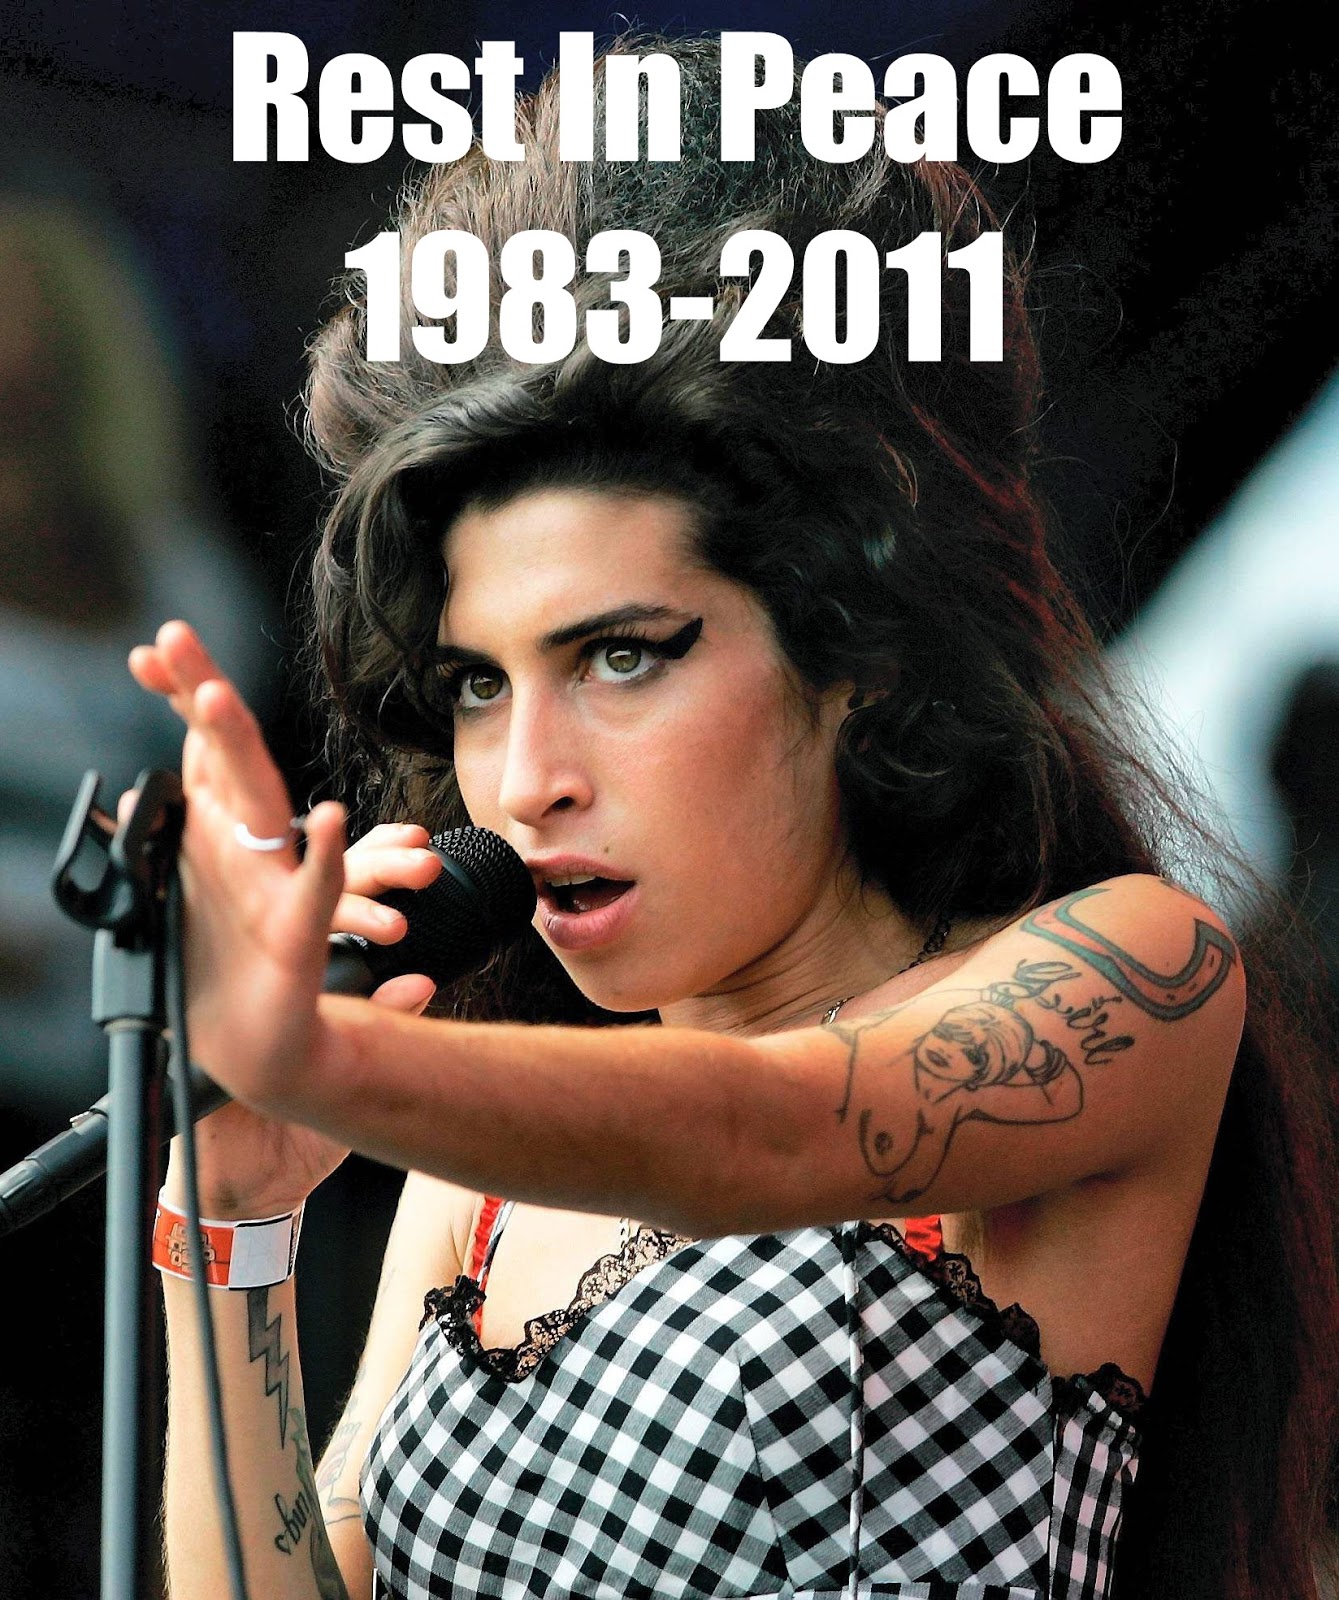 http://3.bp.blogspot.com/-rJwJunHfozY/TisCviwfAtI/AAAAAAAAyfg/PqXTAo7DGG8/s1600/Amy+Winehouse+Is+Dead.jpg